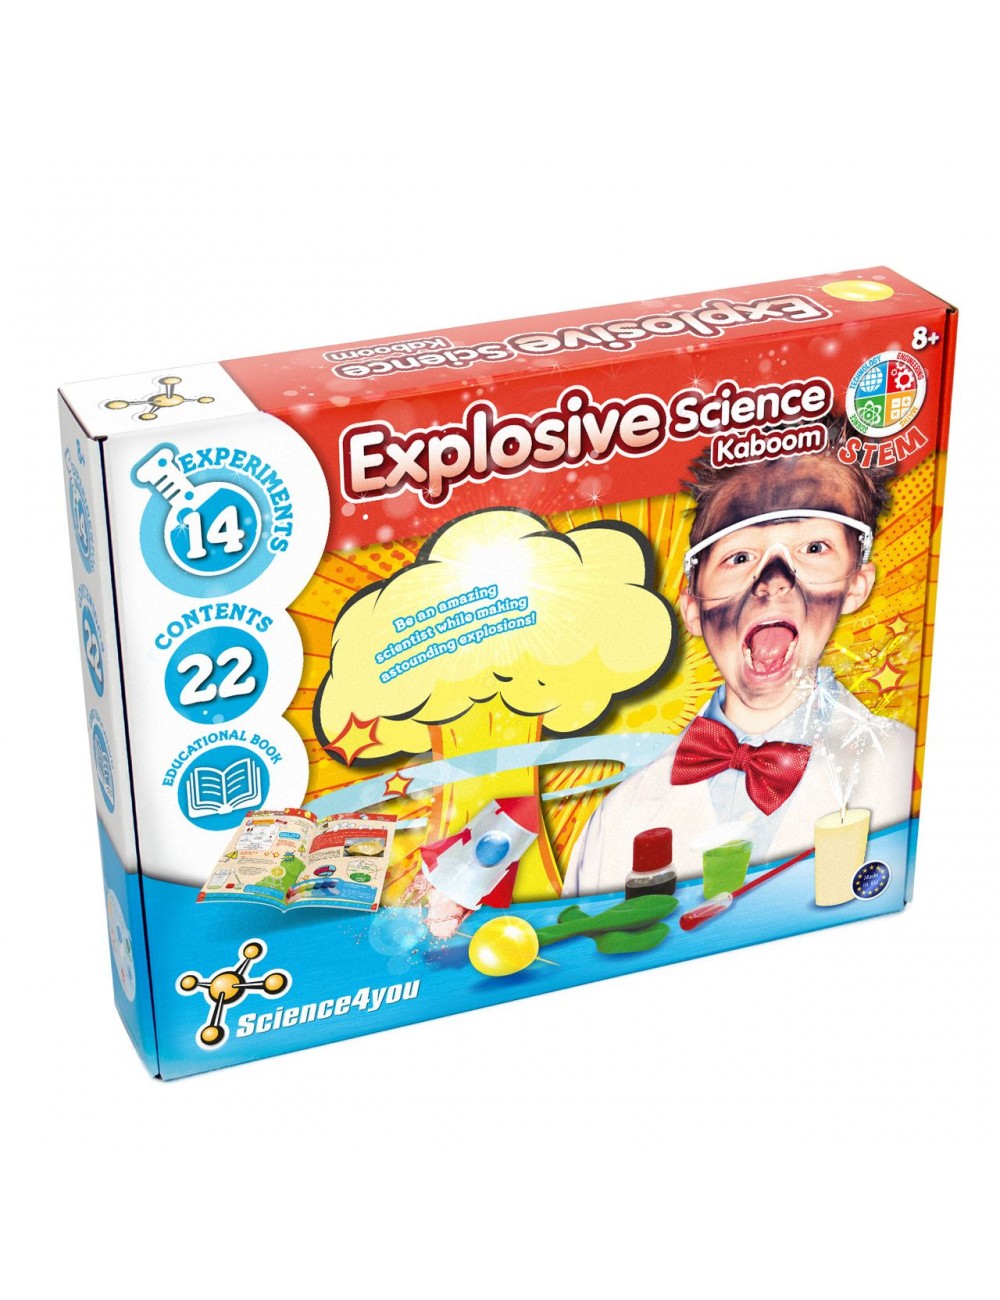 STEM EXPLOSIVE SCIENCE SET Children 8+ 